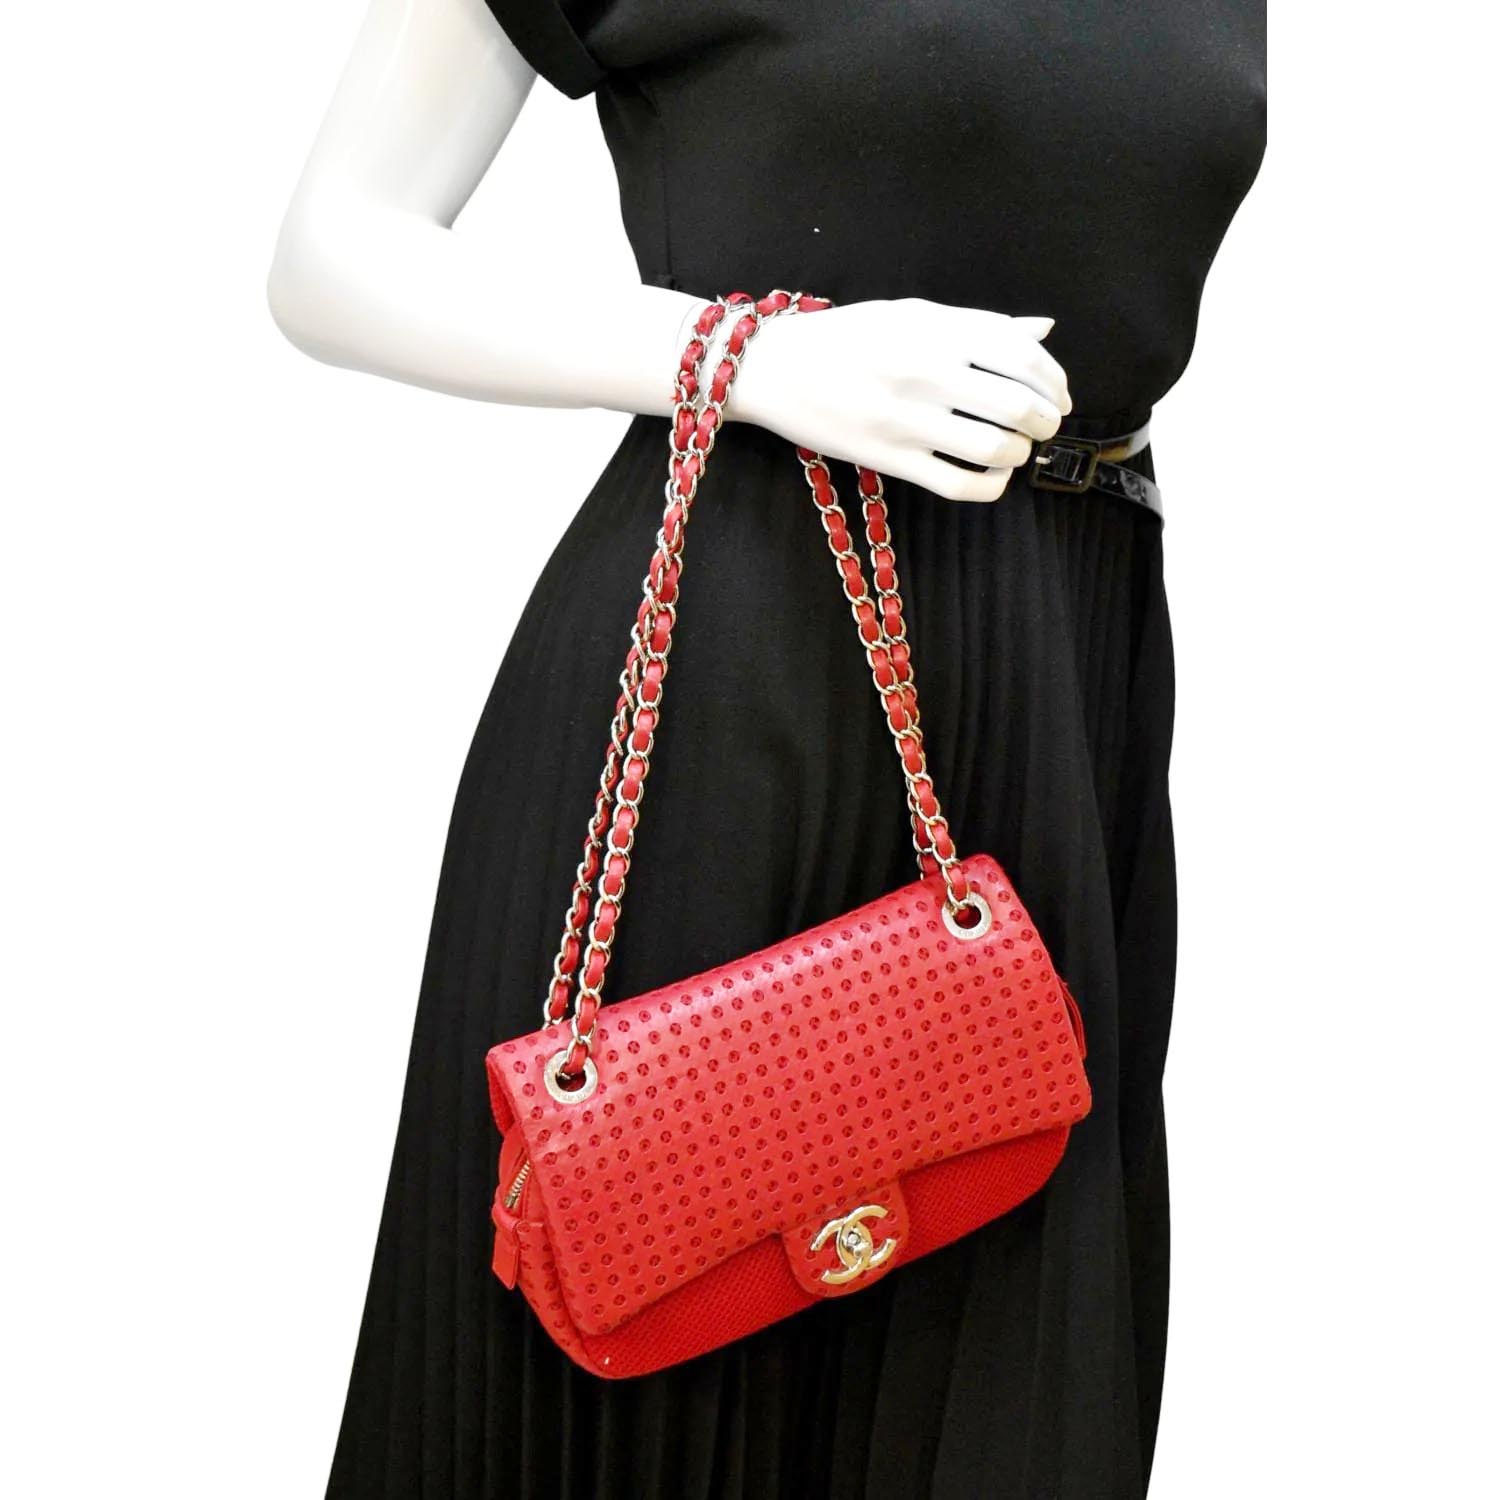 Chanel Perforated Leather Flap Shoulder Bag